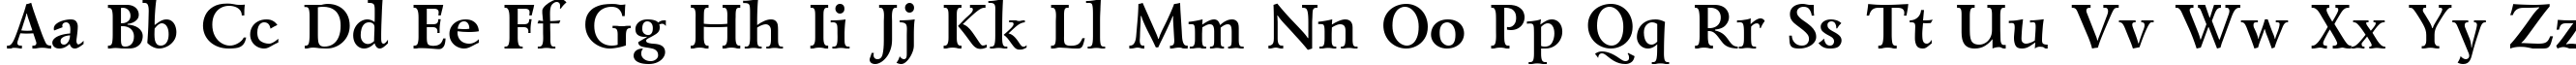 Пример написания английского алфавита шрифтом Lazurski Bold Cyrillic